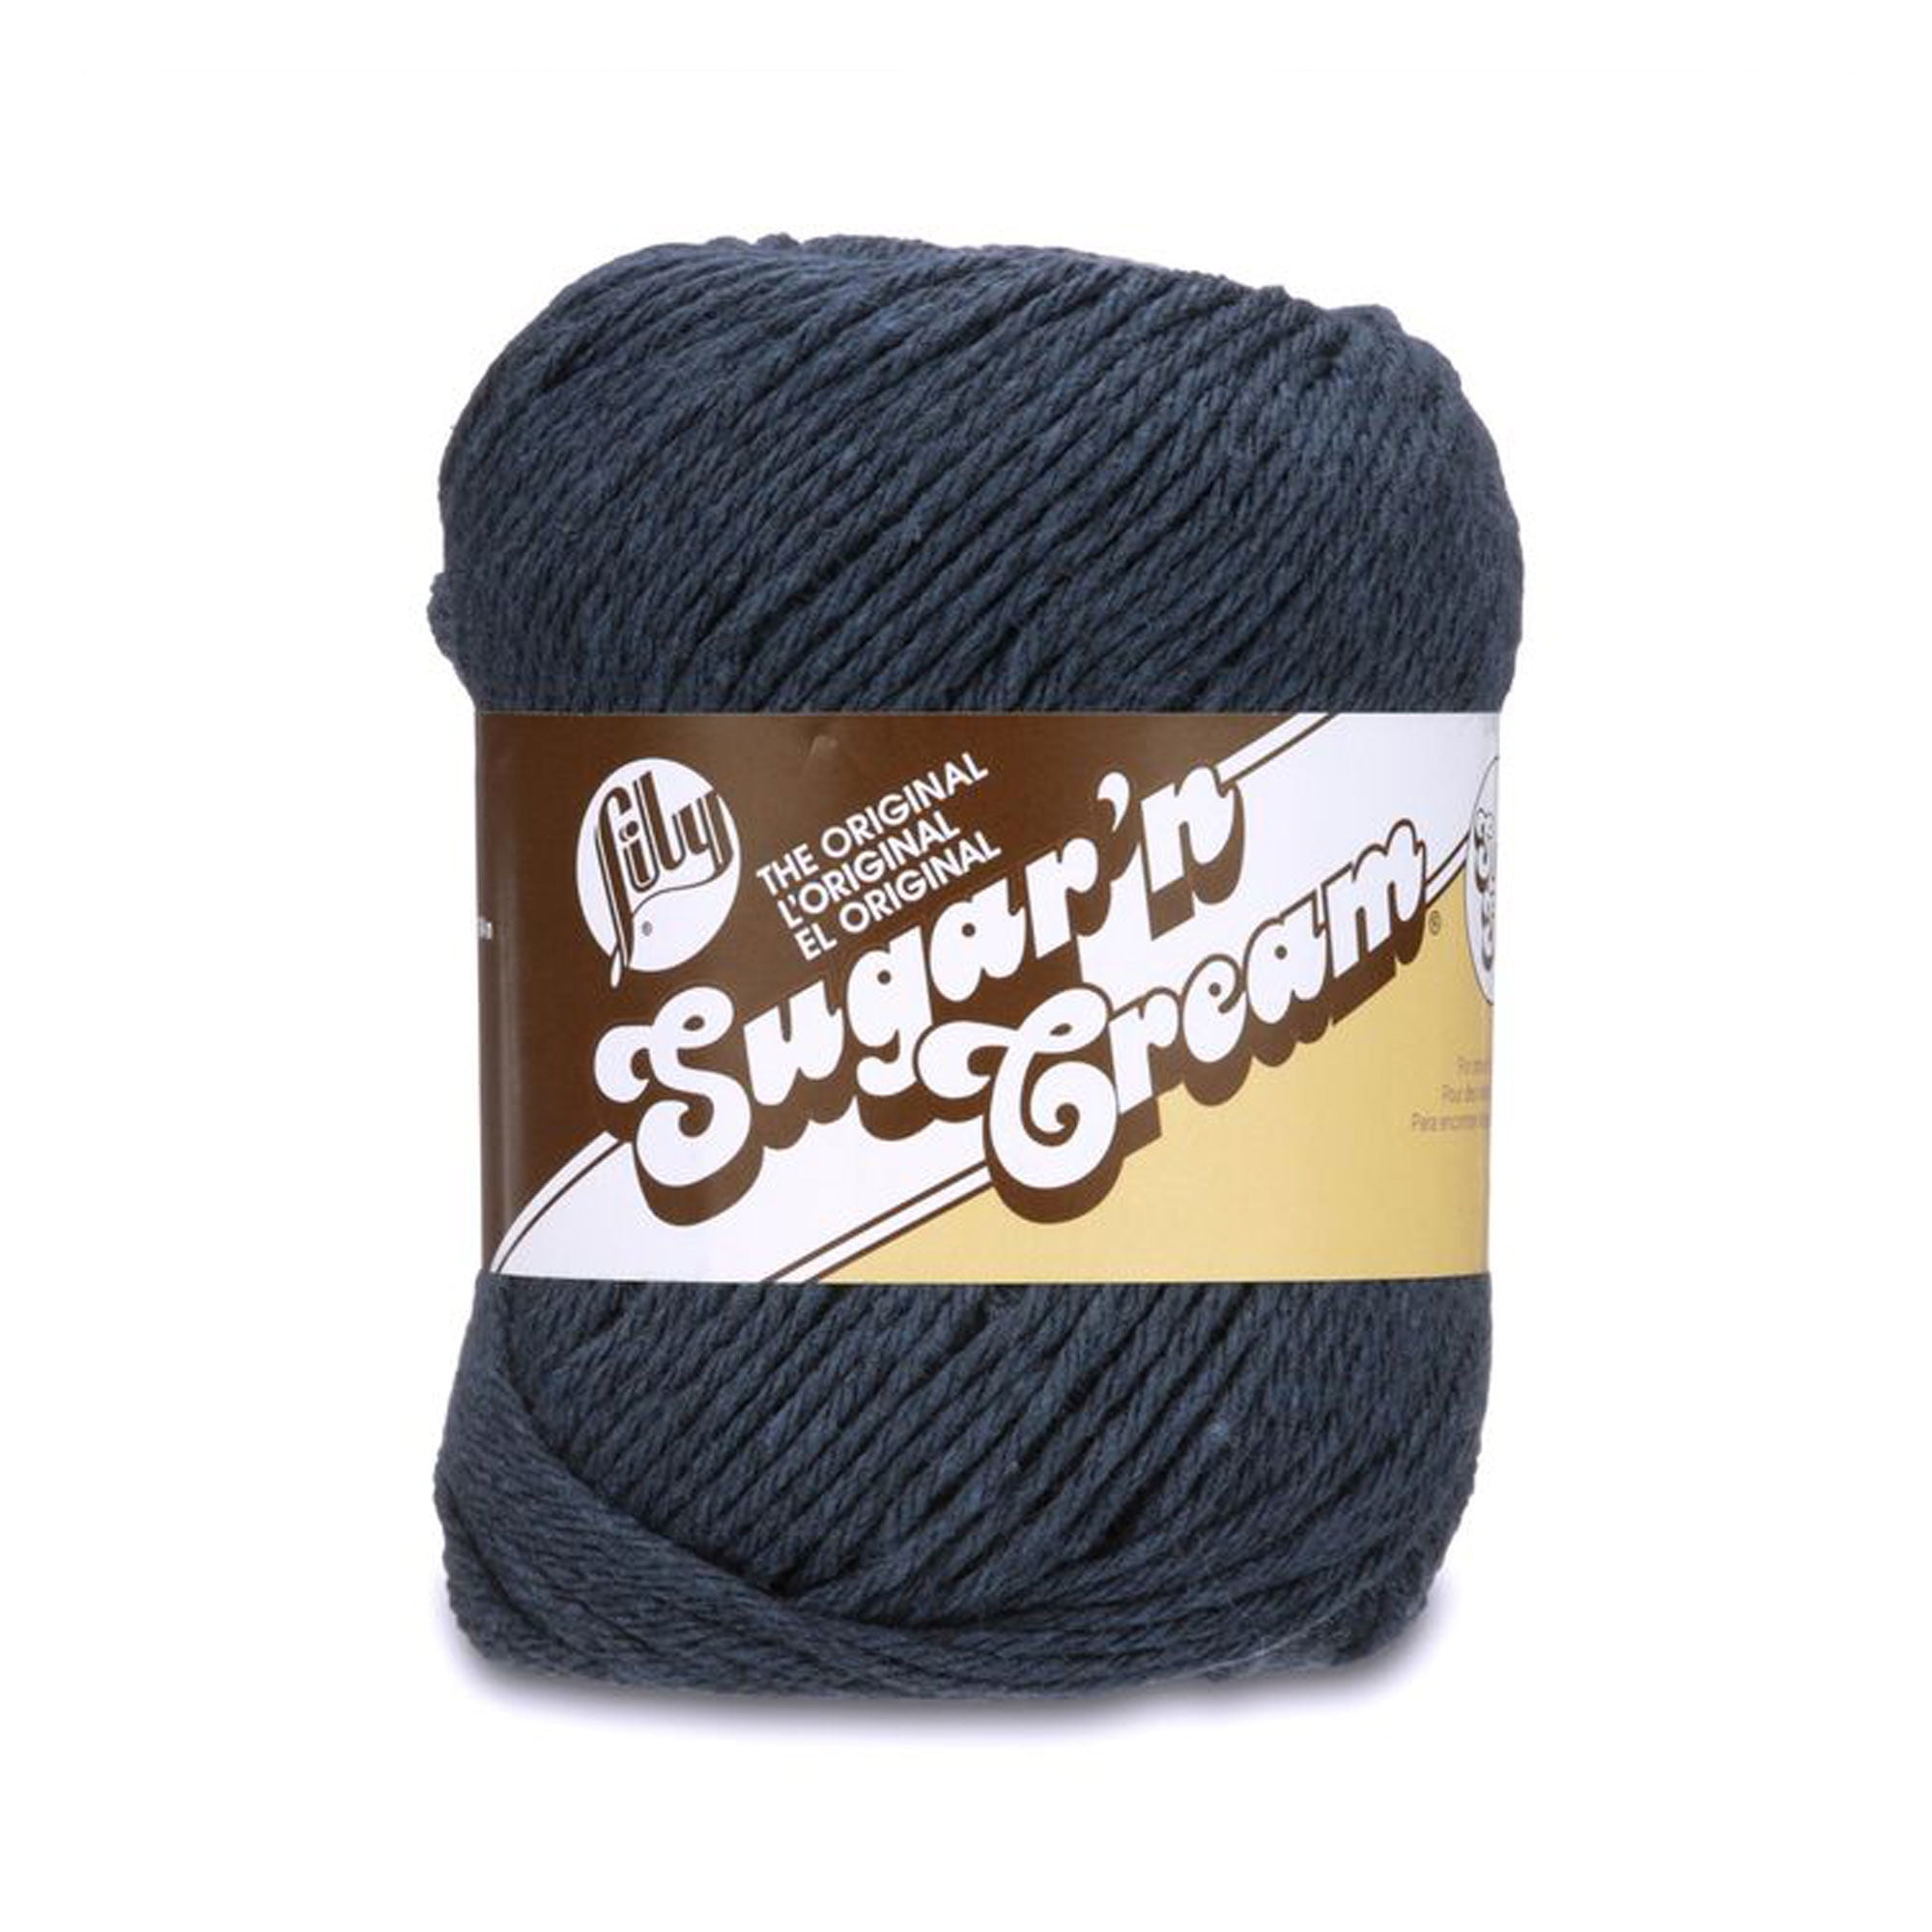  Lily Sugar 'N Cream Super Size Solid Yarn, 4oz, Gauge 4 Medium,  100% Cotton - Hot Orange - Machine Wash & Dry